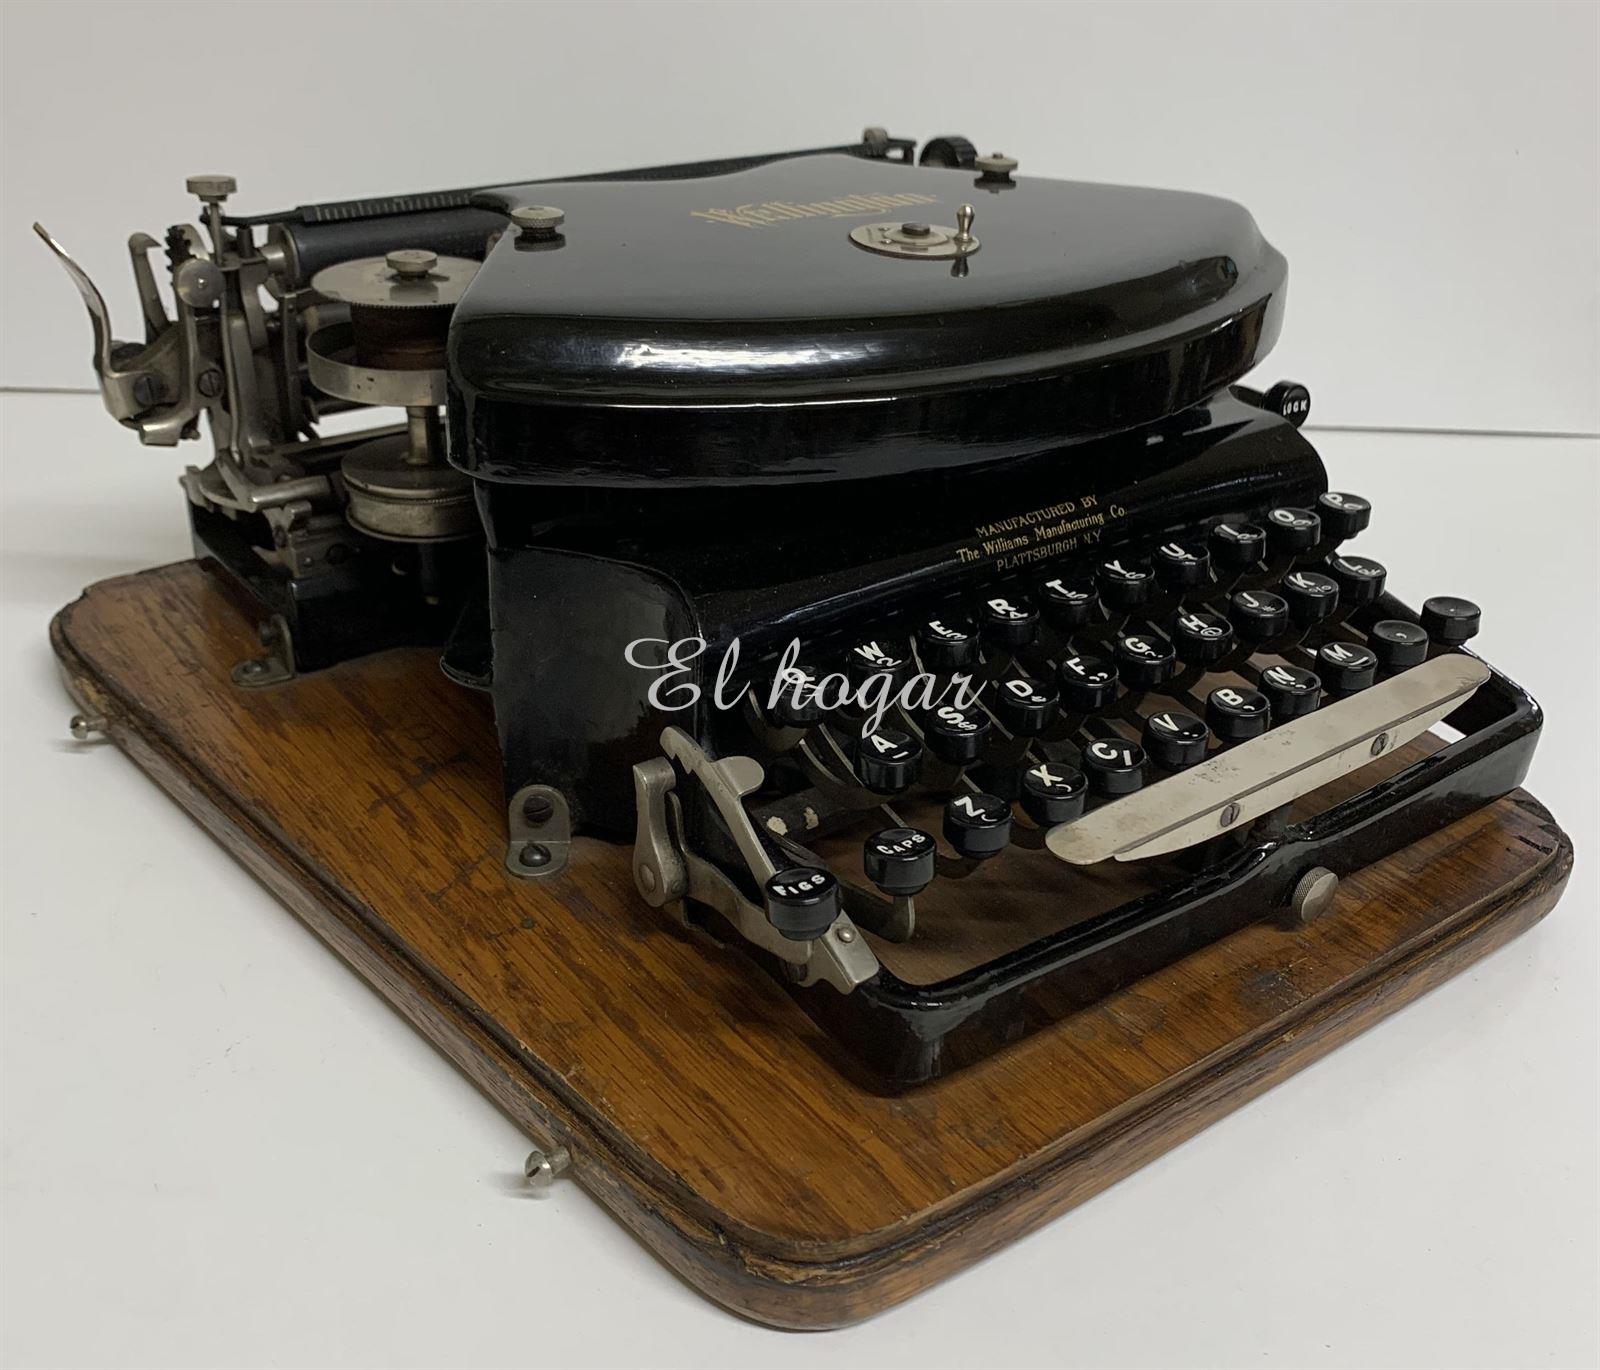 Maquina de escribir Wellington - Imagen 1